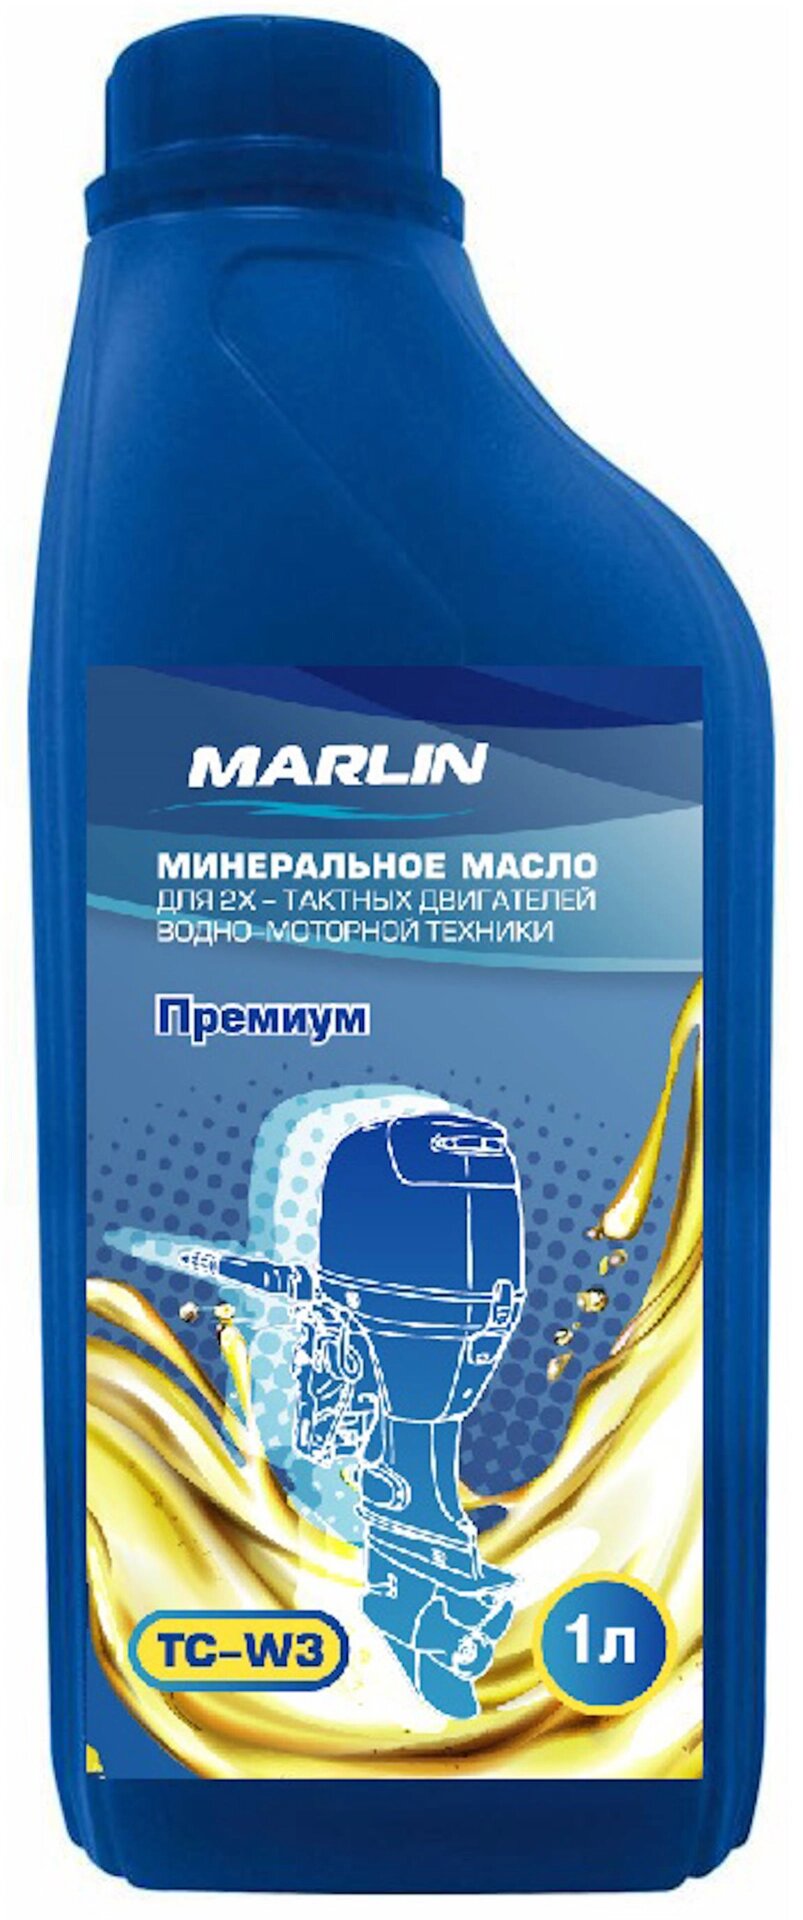 Масло MARLIN Премиум 2Т, TC-W3 (1 литр)/полусинт. от компании "Посейдон" товары для рыбалки и активного отдыха - фото 1